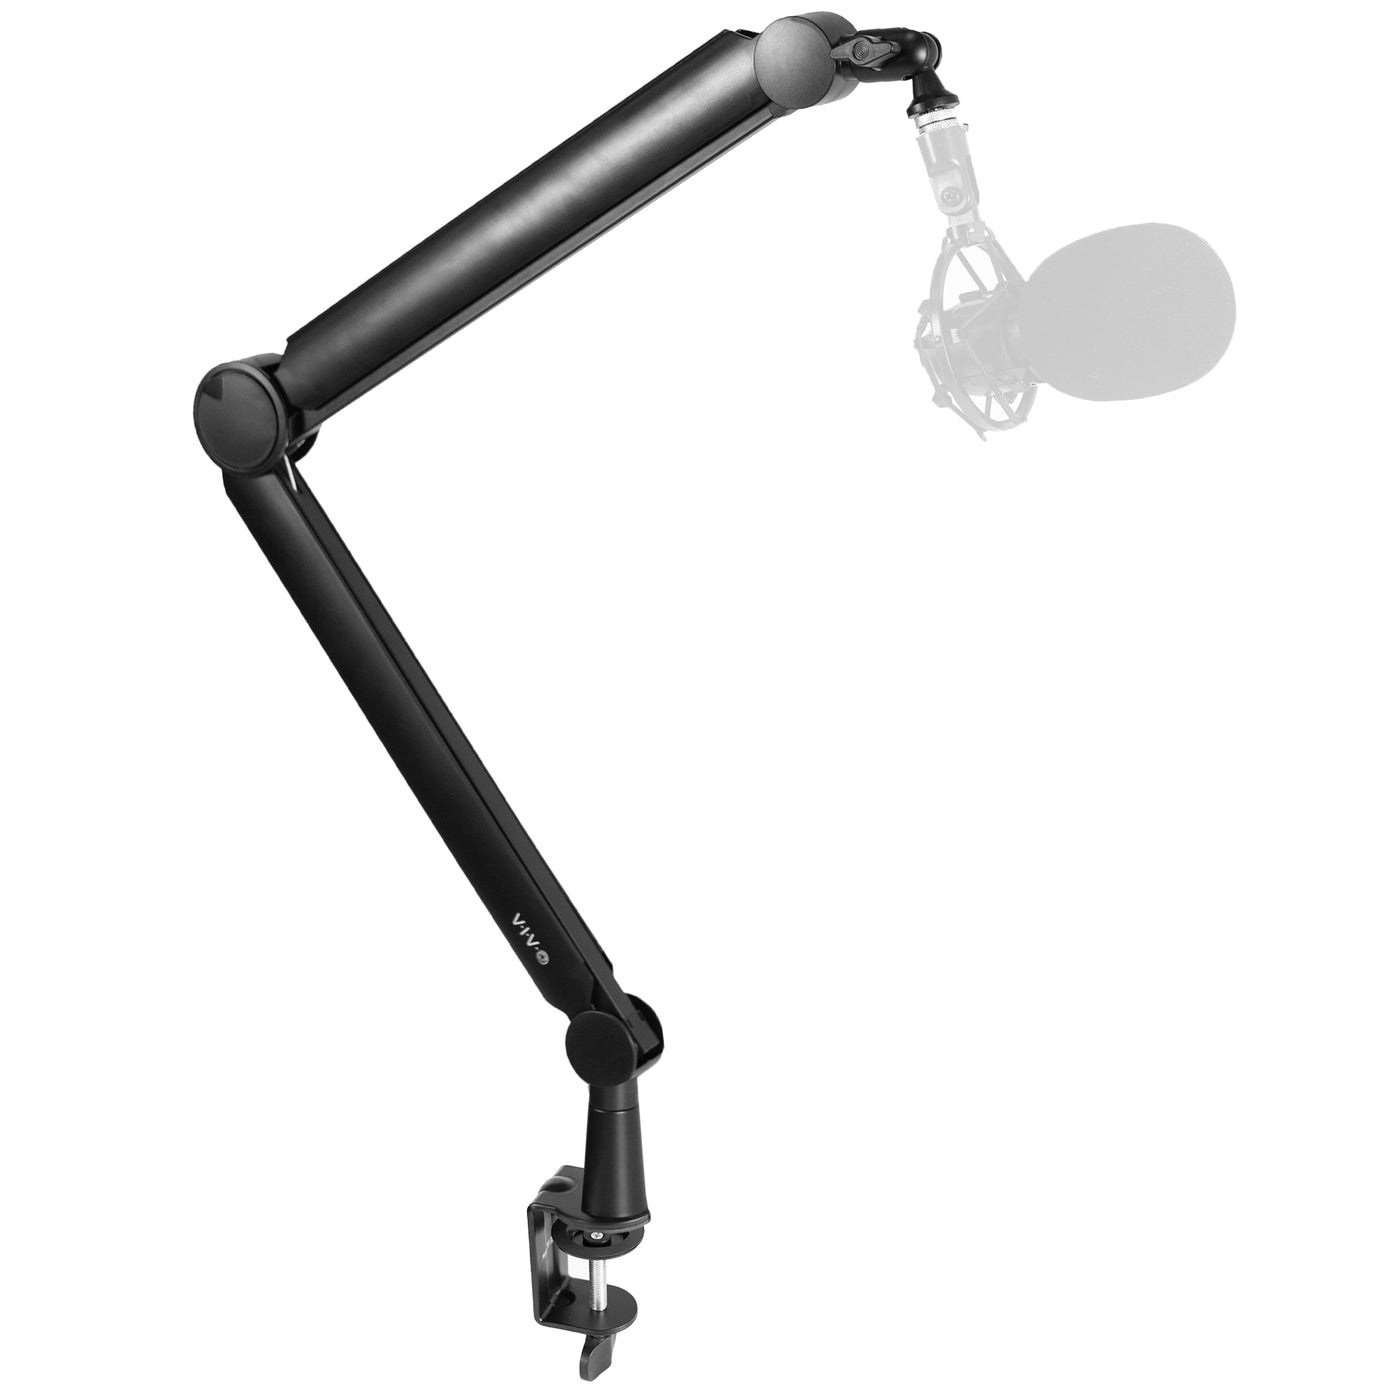 C-clamp microphone desk mount.